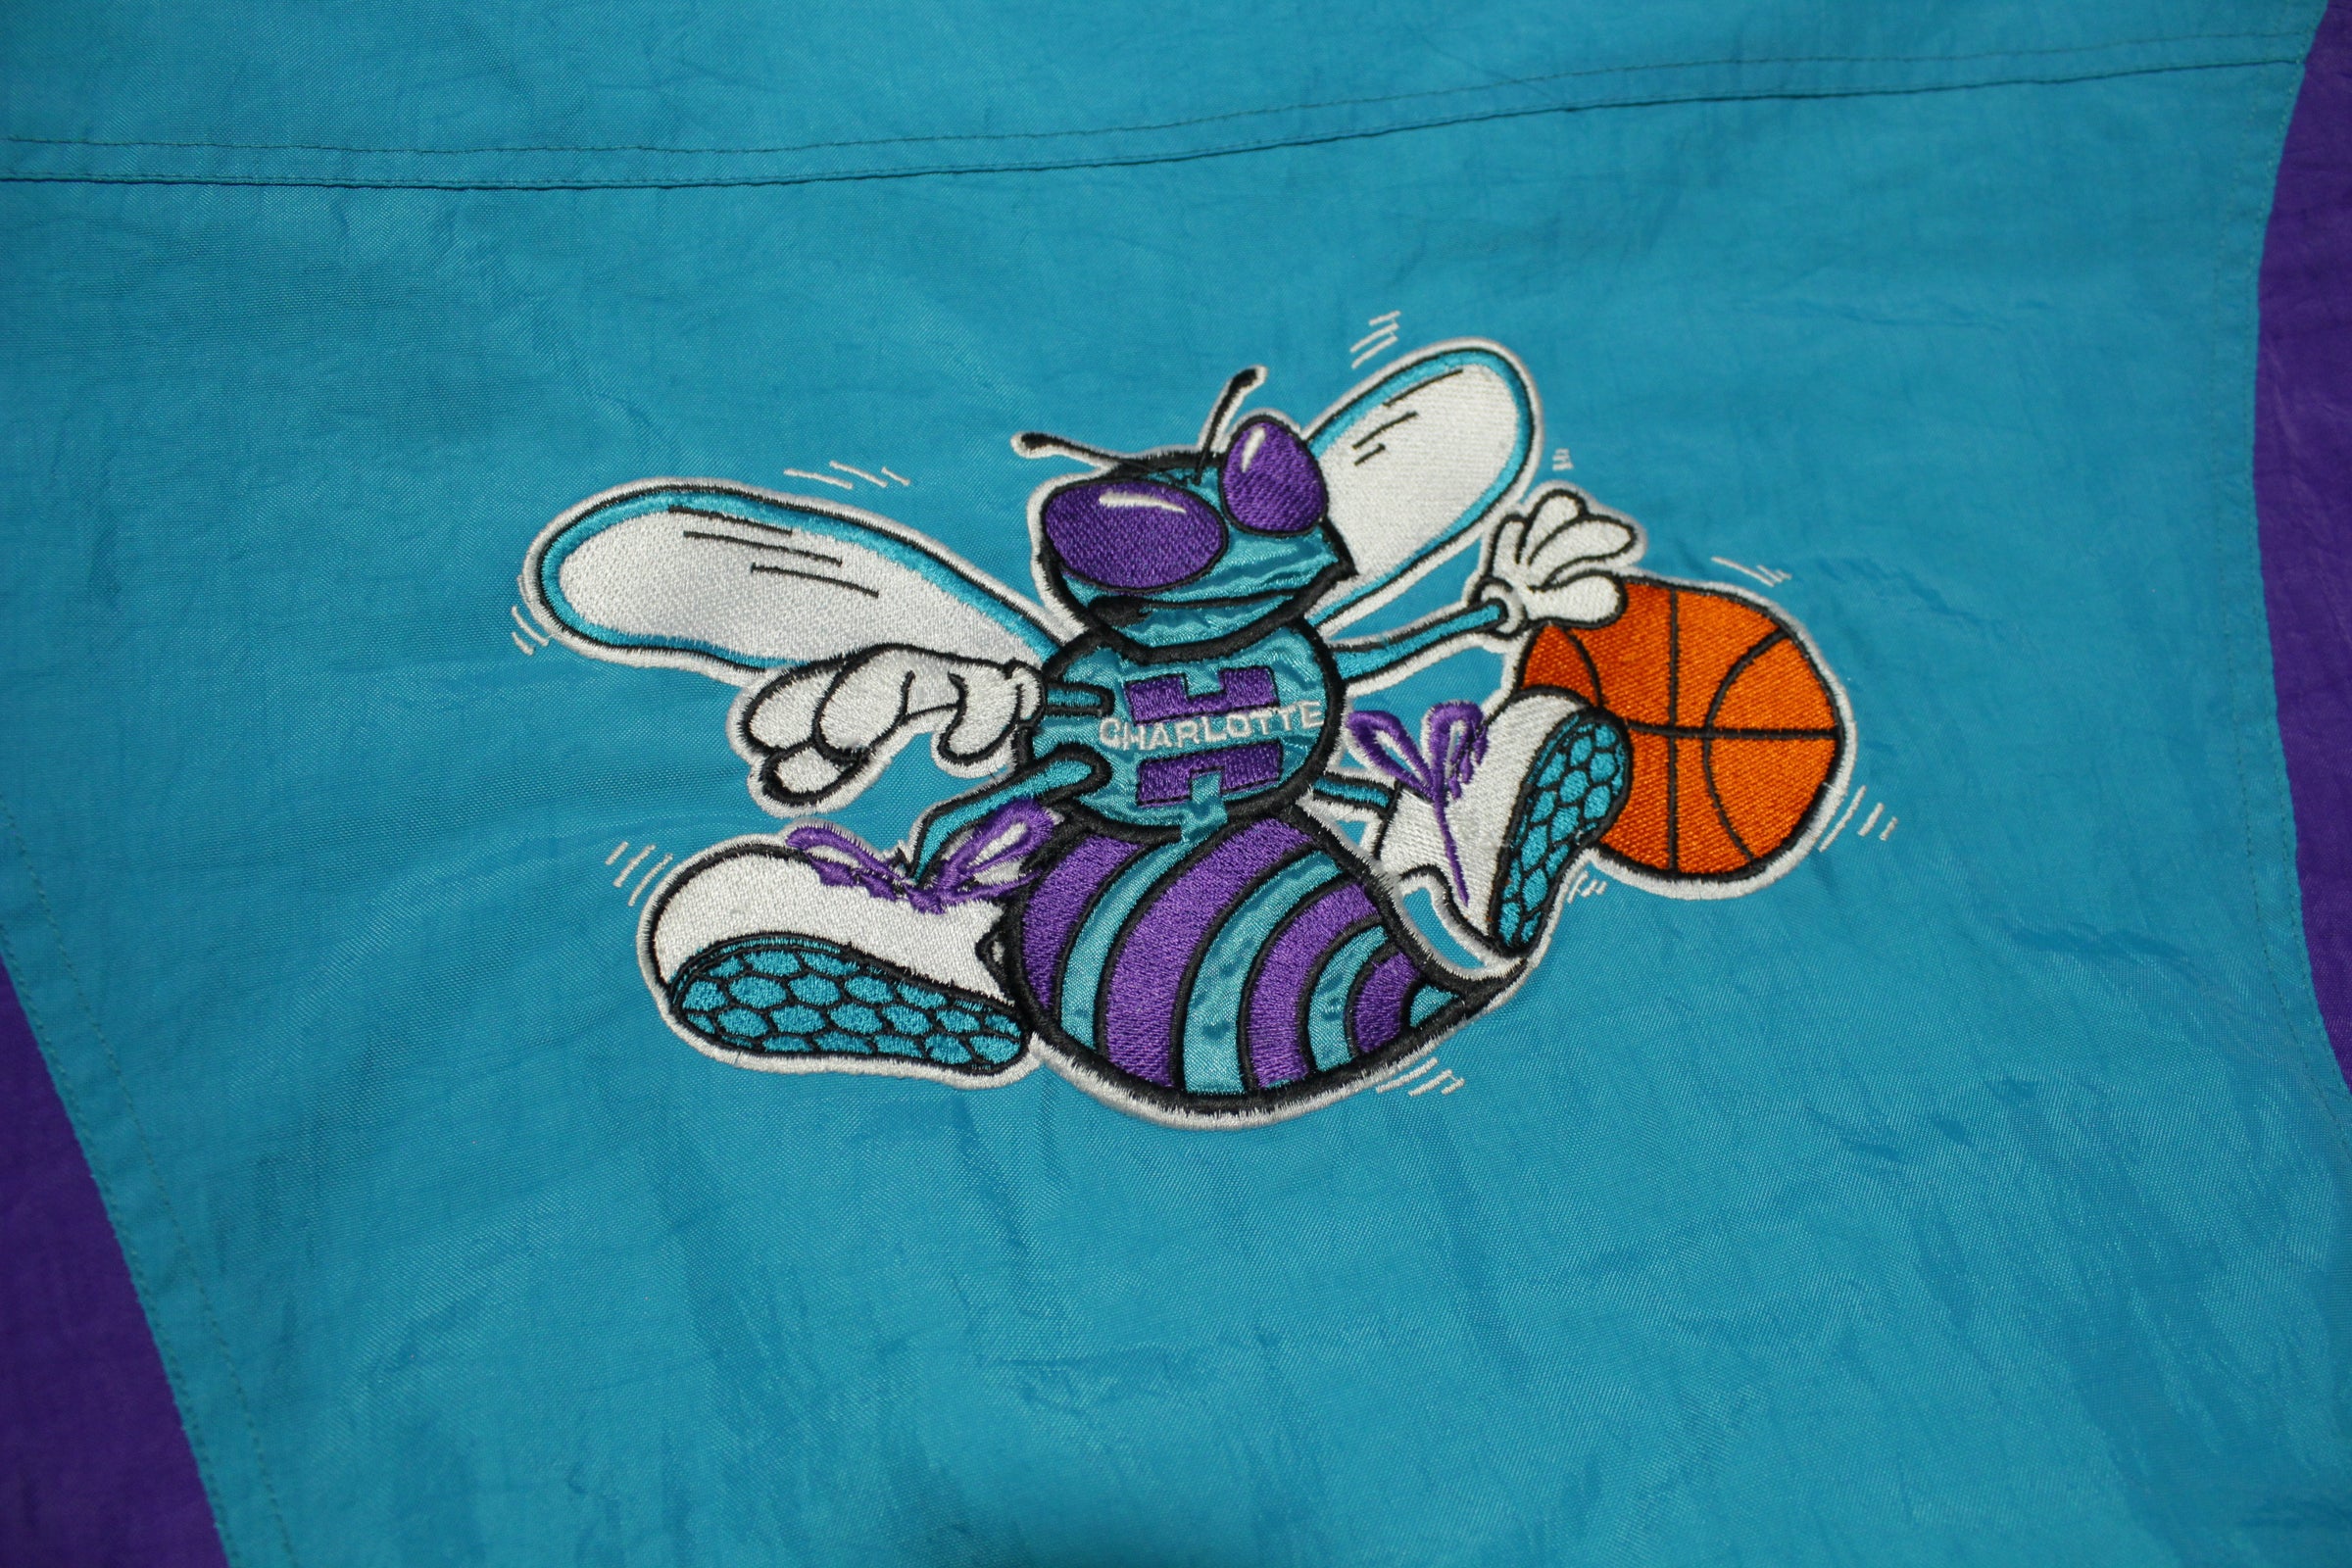 Charlotte Hornets Vintage 90's Teal Starter Pullover Jacket Center Pou –  thefuzzyfelt